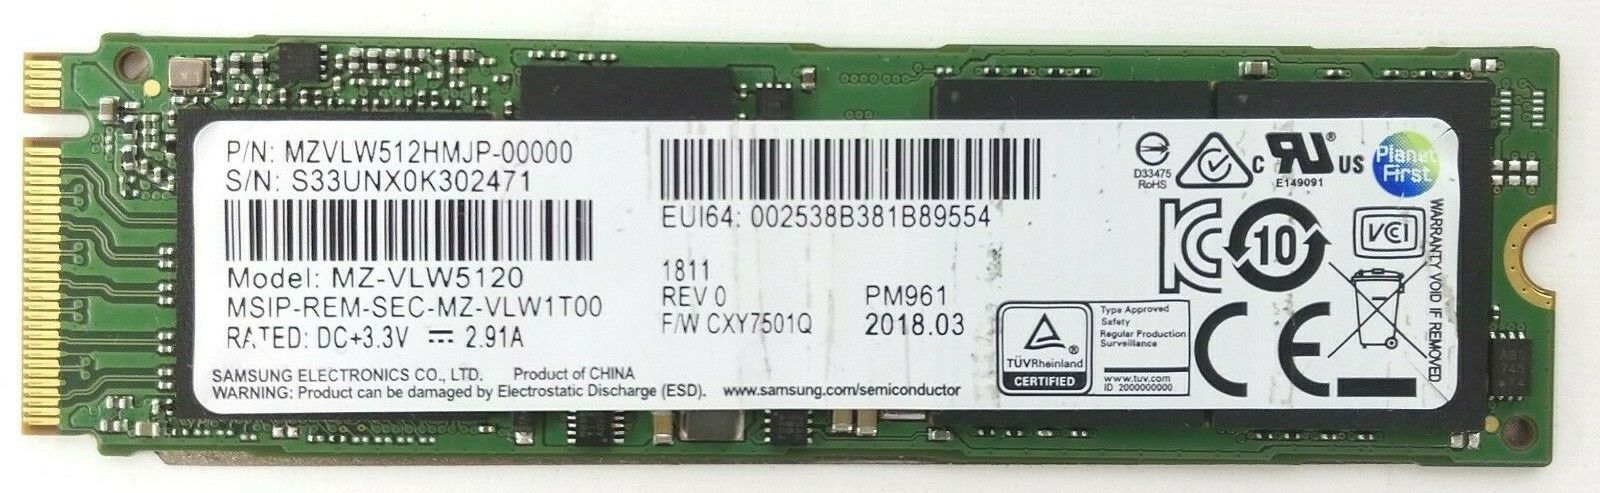 Samsung PM961 Polaris 512GB M.2 NGFF PCIe Gen3 x4 (MZVLW512HMJP-00000)